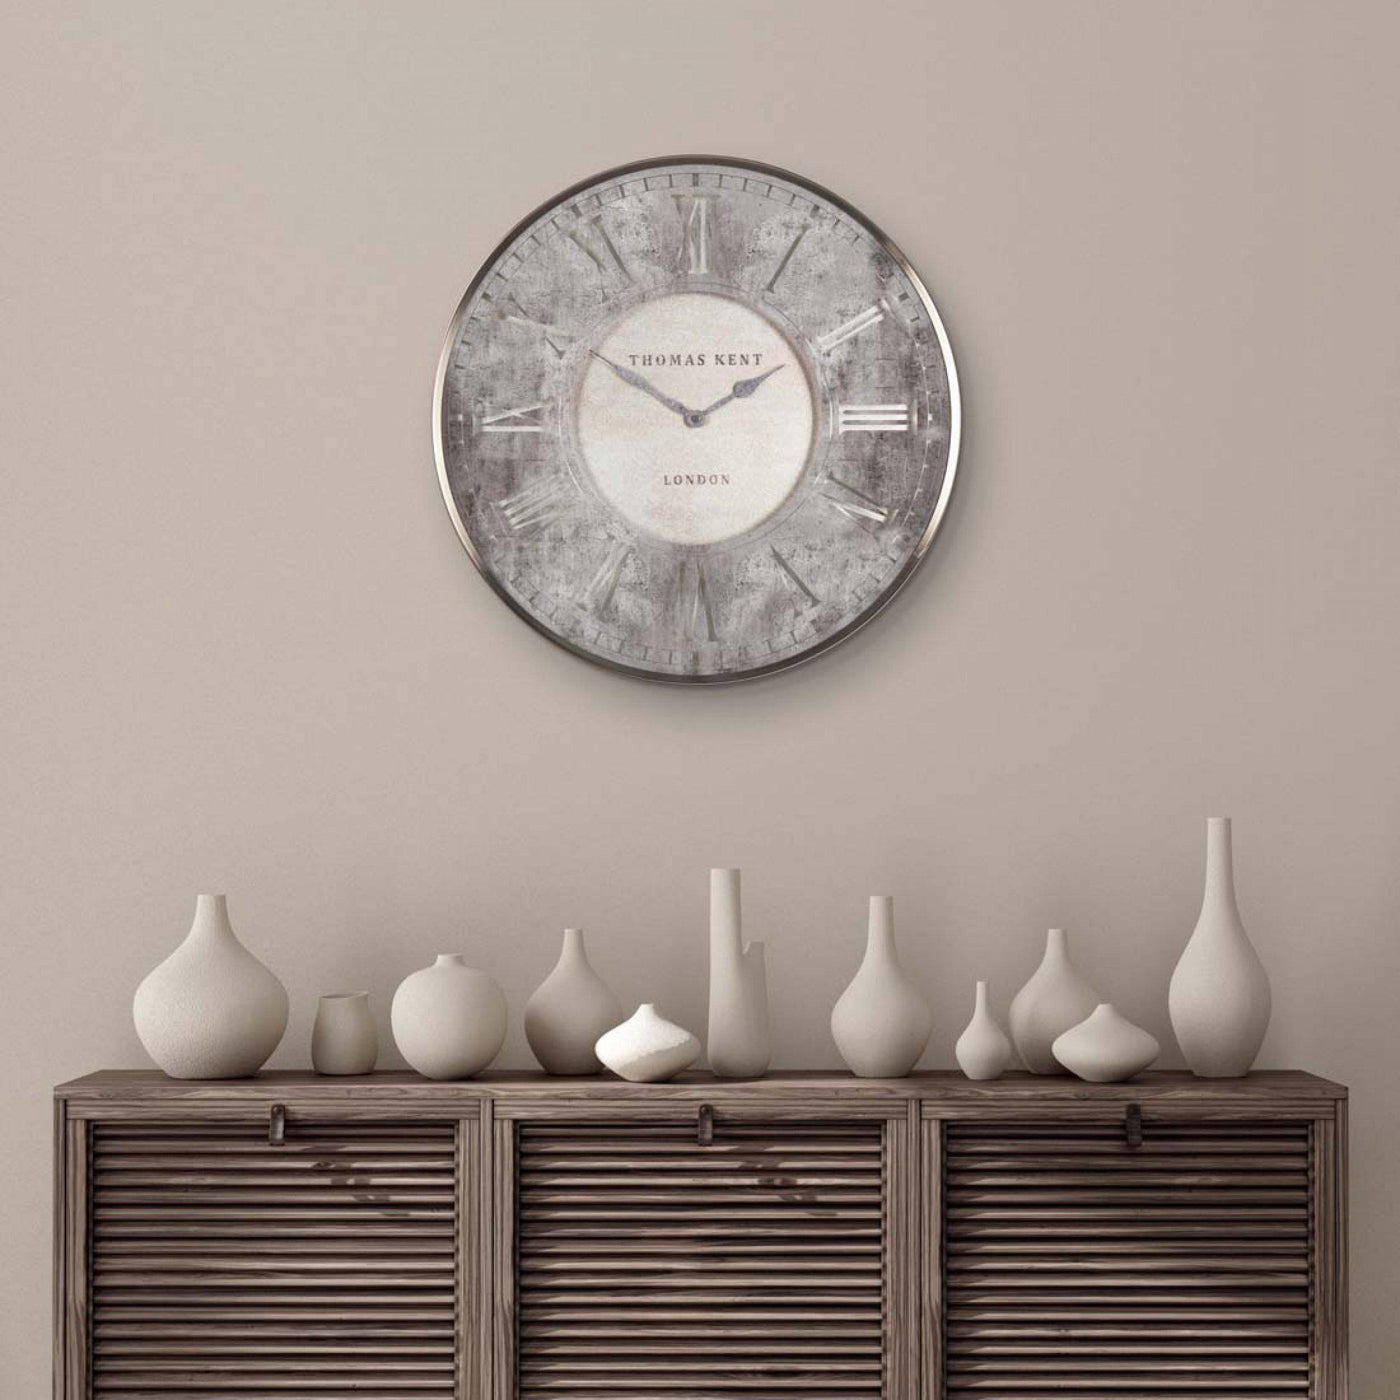 Thomas Kent London. Florentine Star Silvern Wall Clock 21" (53cm) Silver *STOCK DUE MARCH* - timeframedclocks